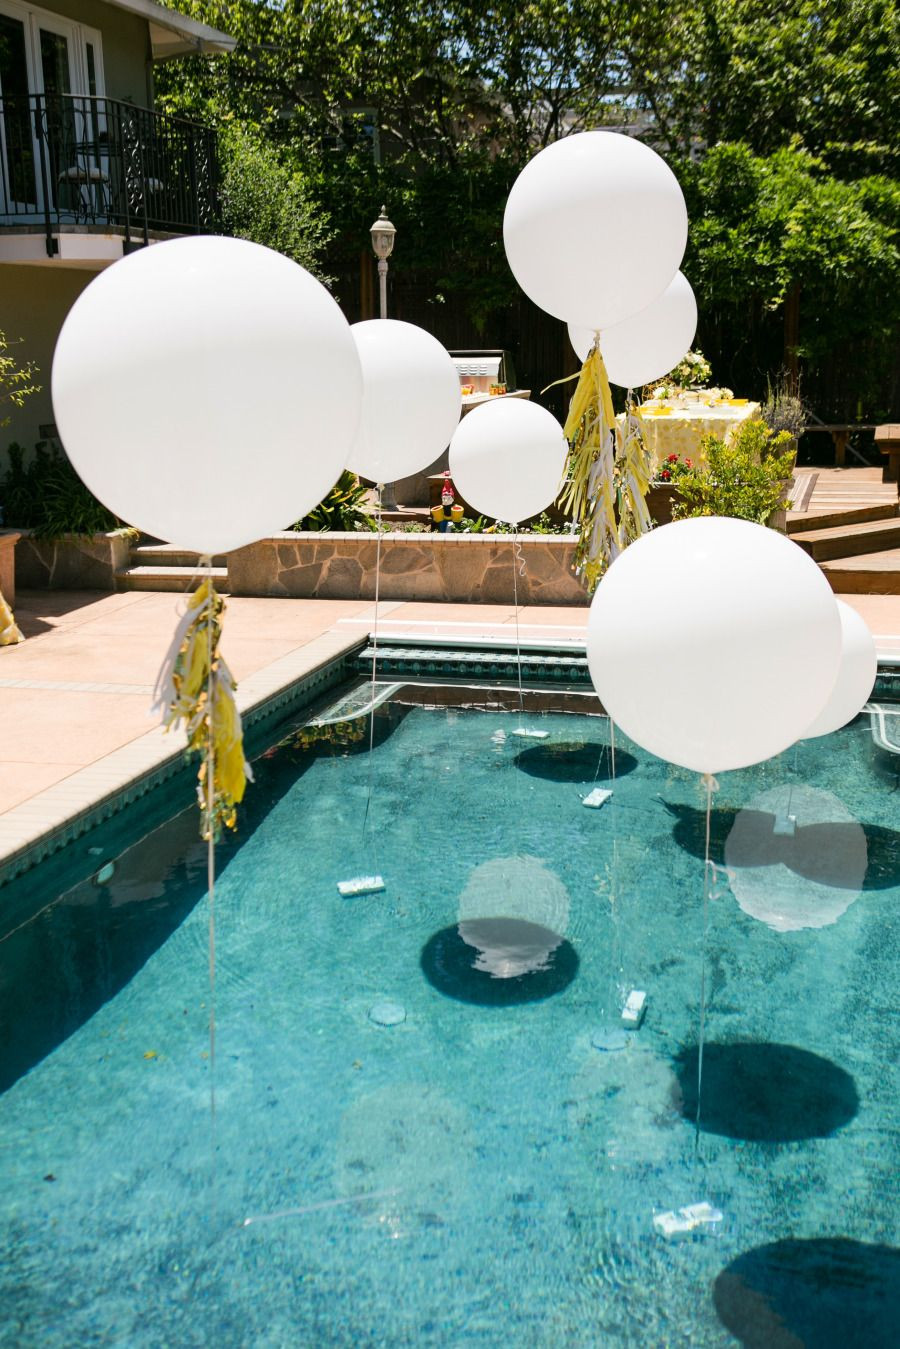 Pool Party Decoration Ideas
 Al Fresco Baby Shower in 2019